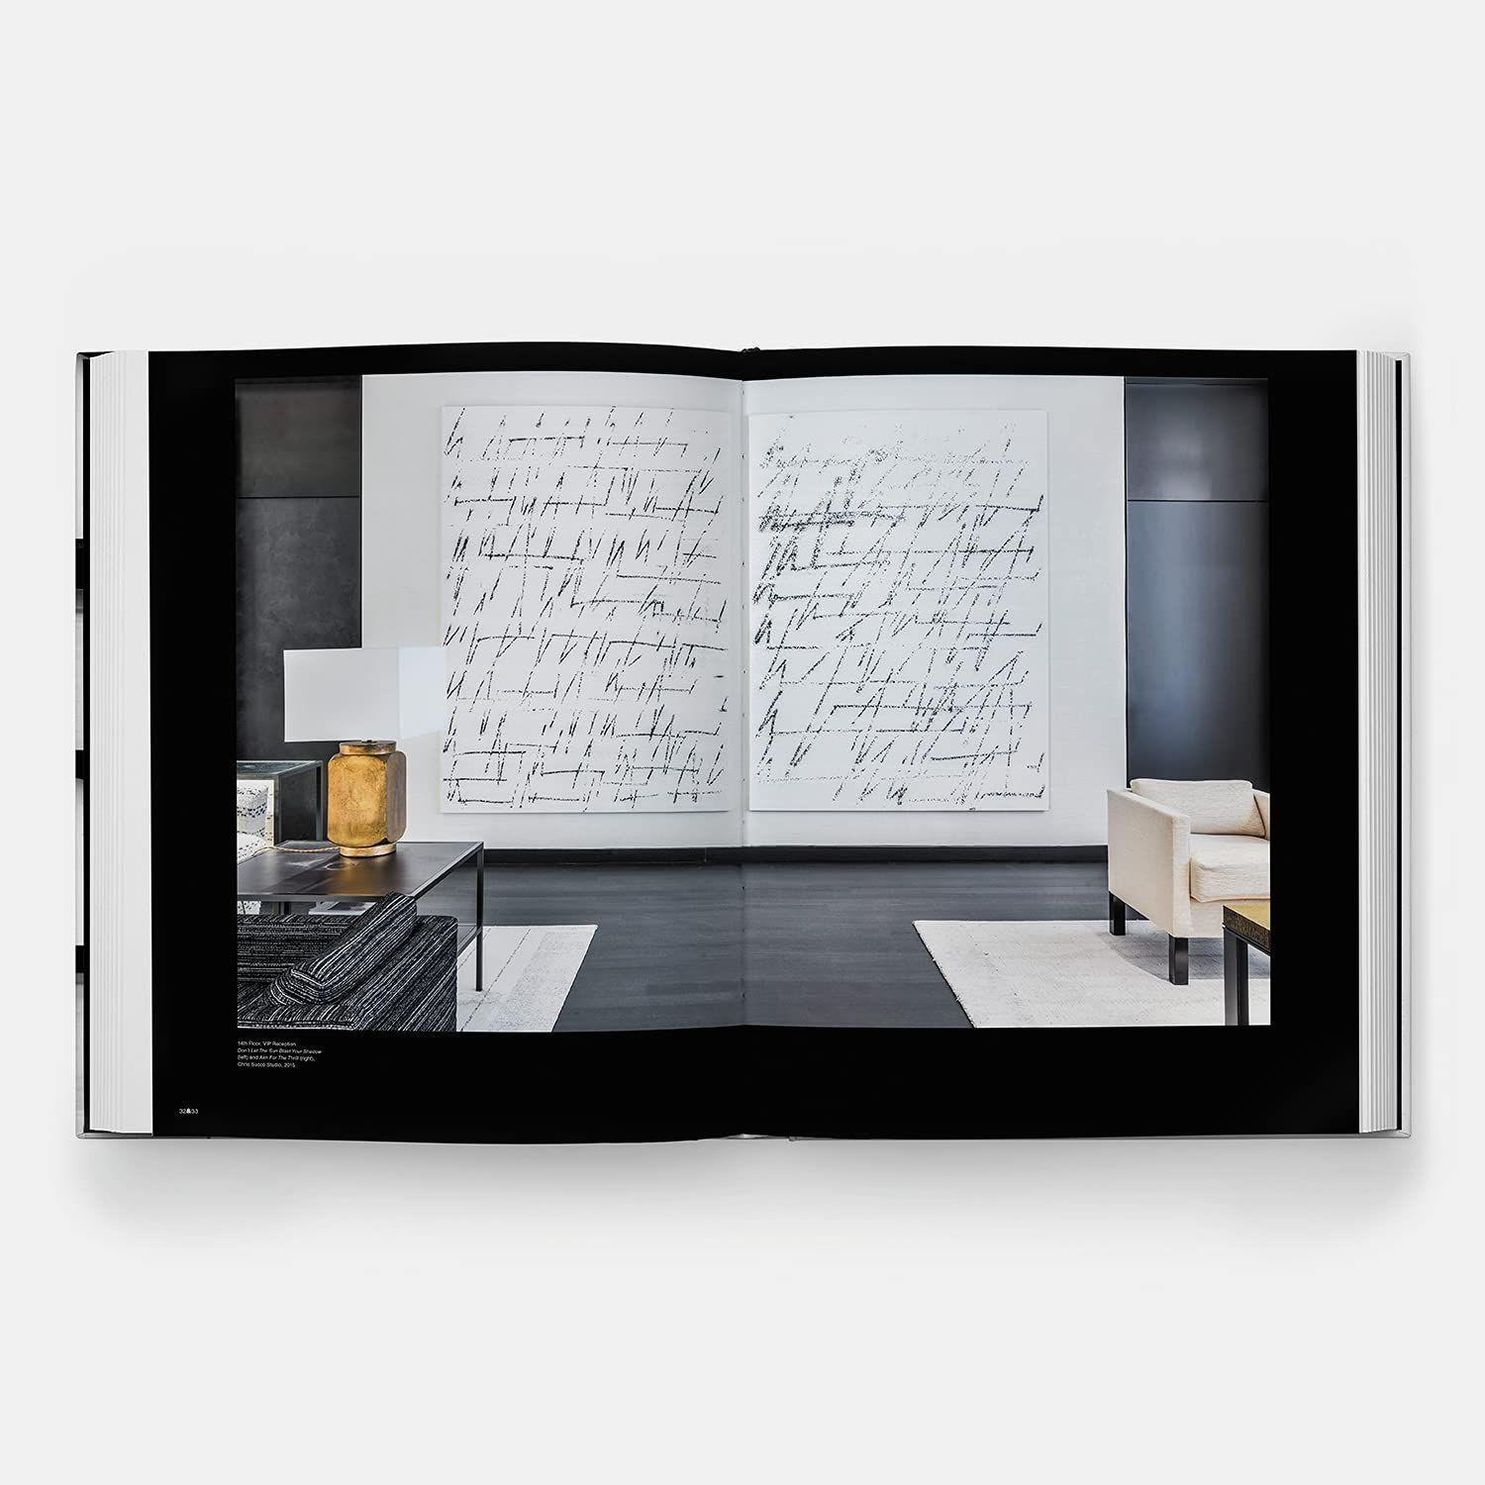 Peter Marino: The Architecture of Chanel - Teşvikiye Patika Kitabevi